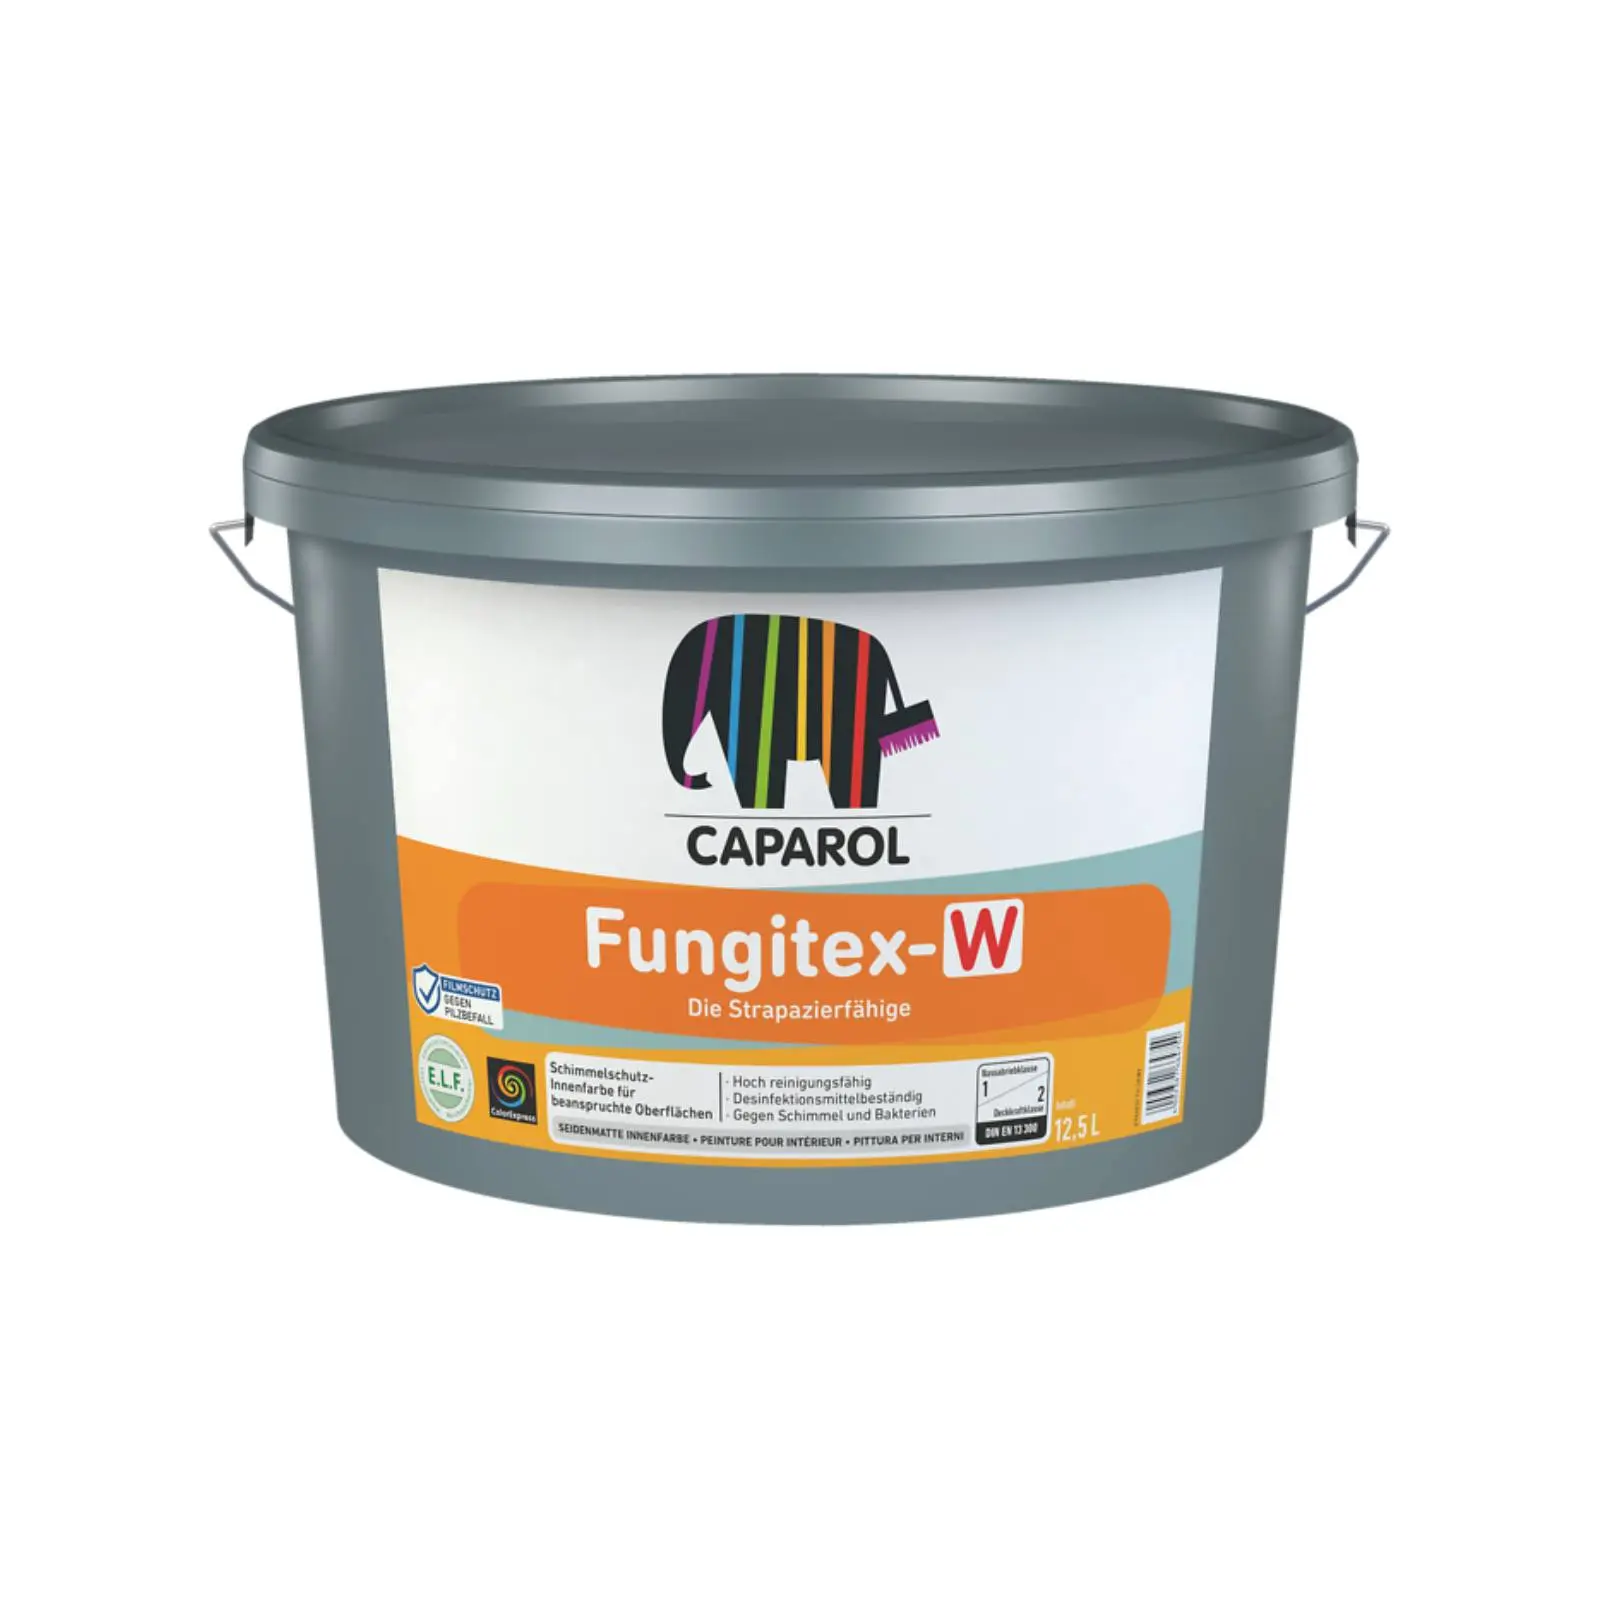 Caparol Fungitex-W, weiß, 12,5 Liter